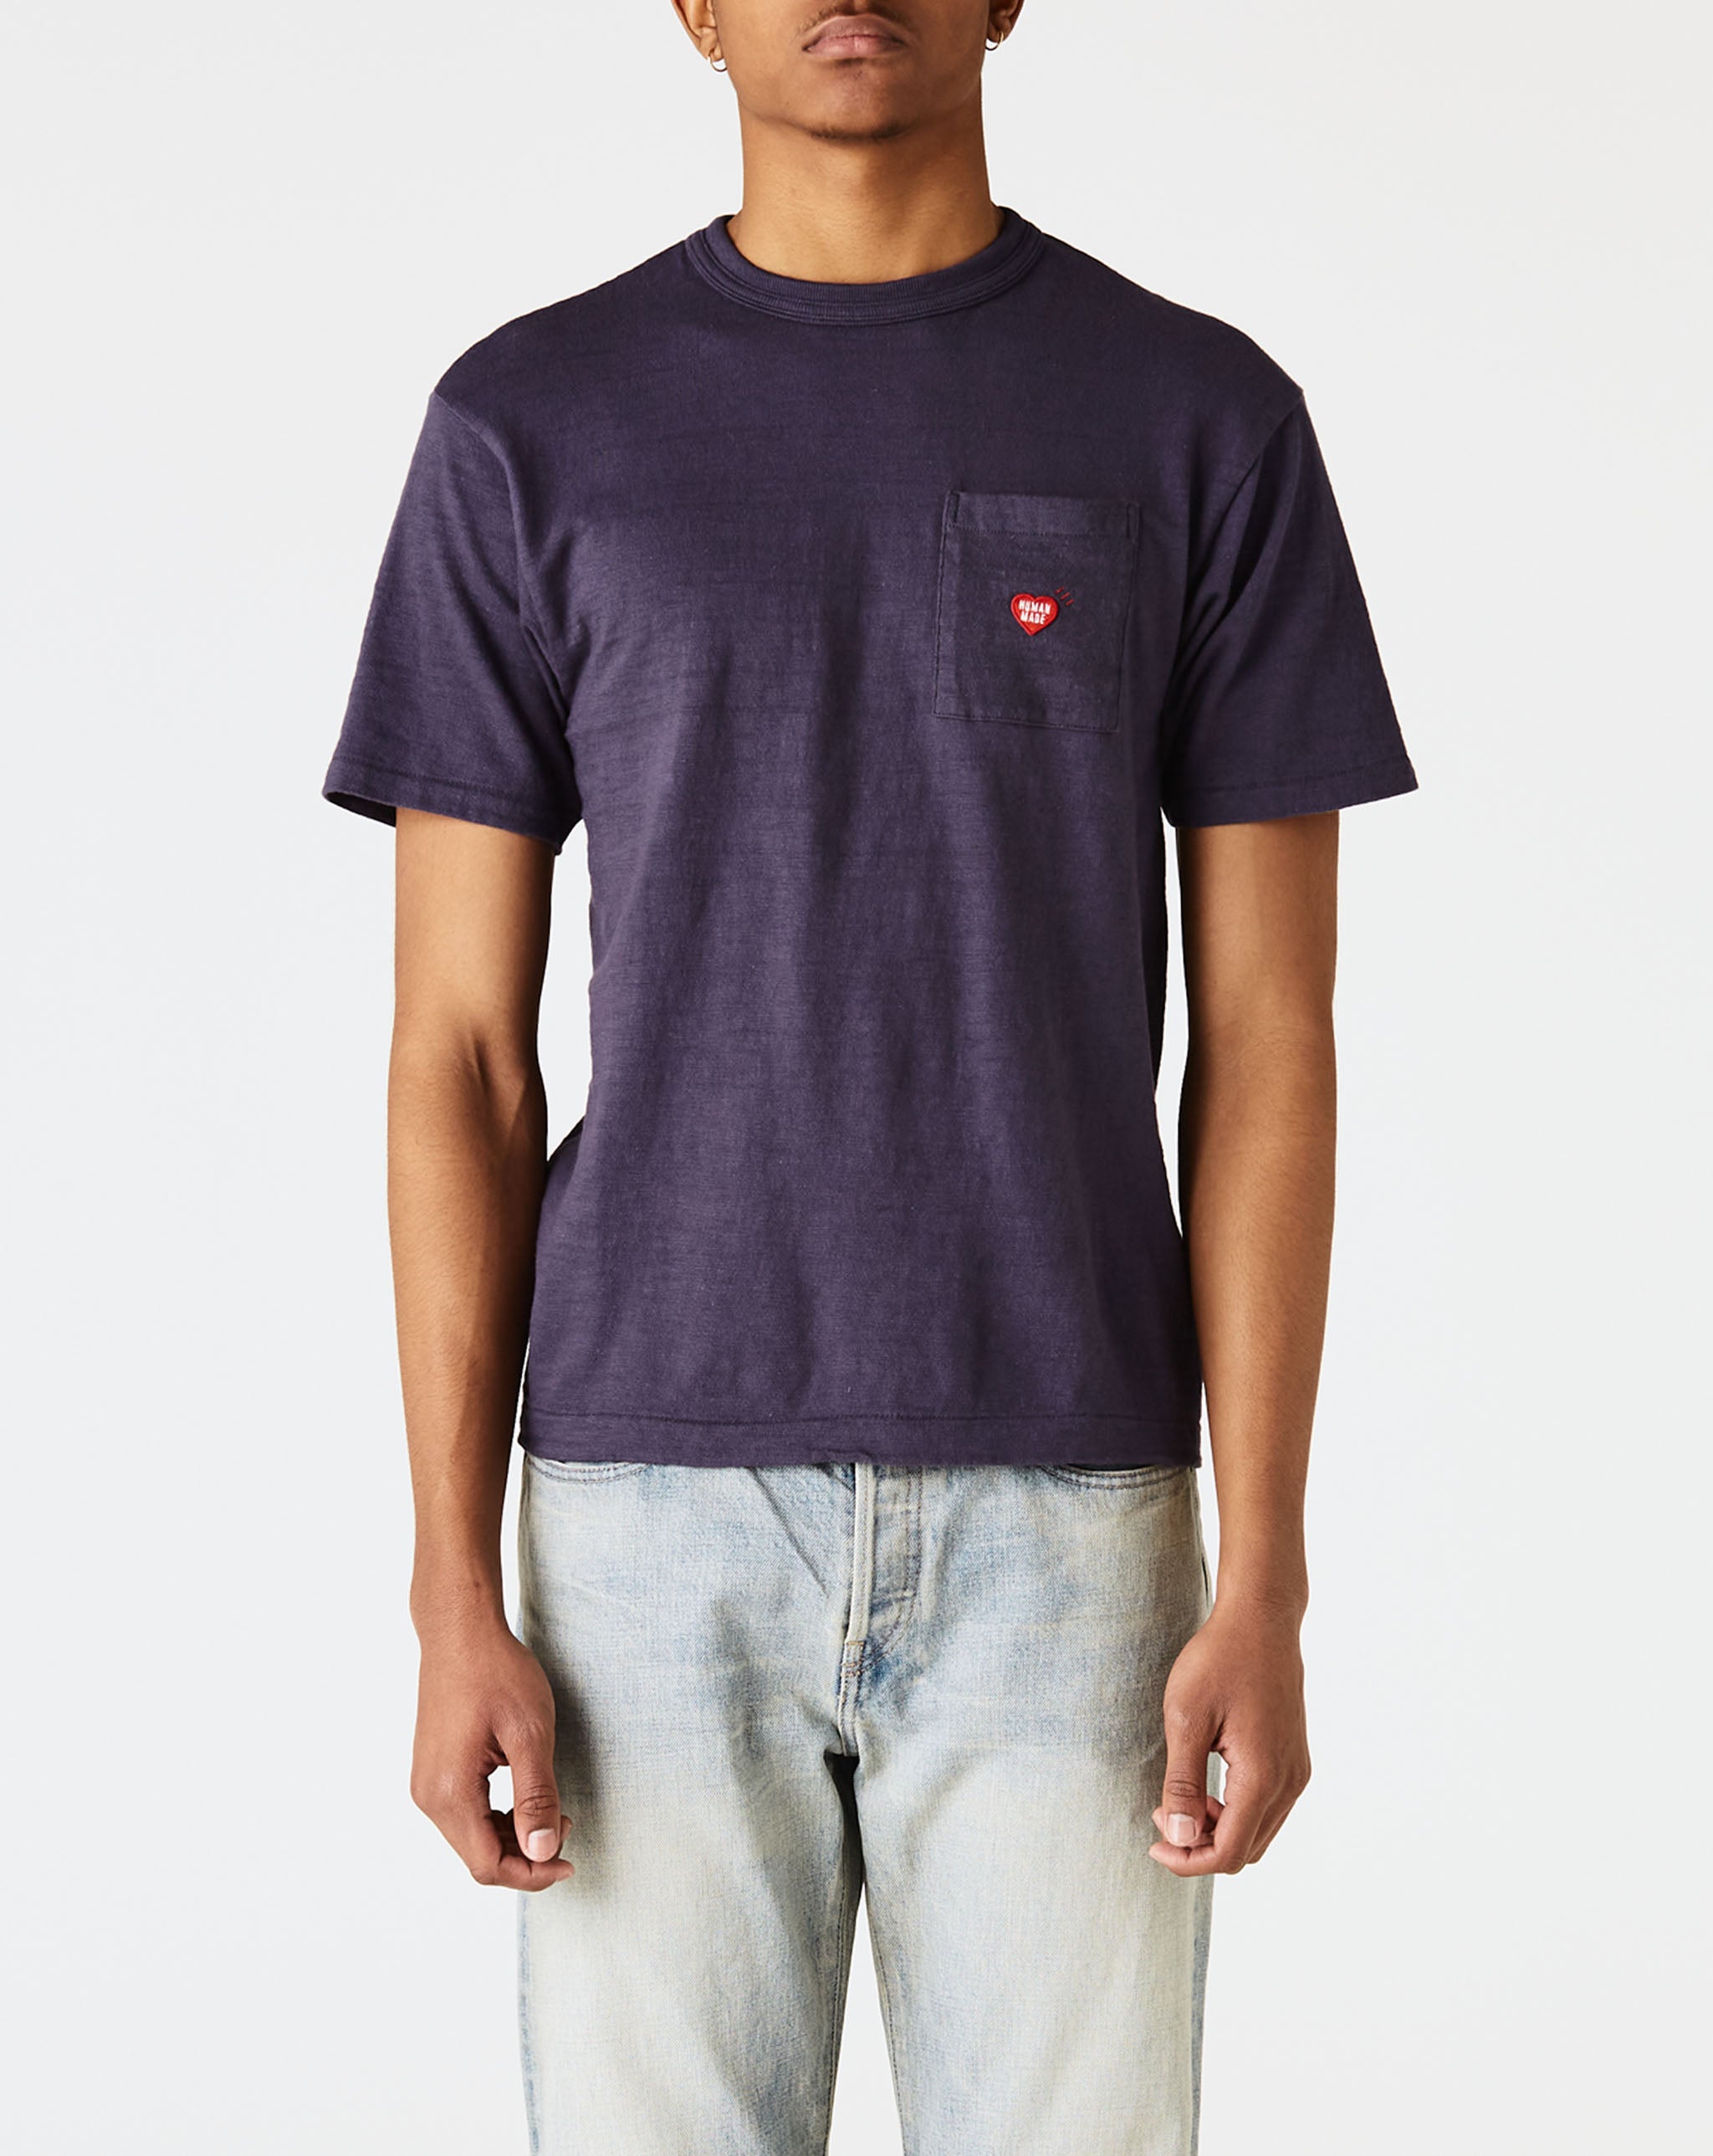 Pocket T-Shirt #2 – Xhibition